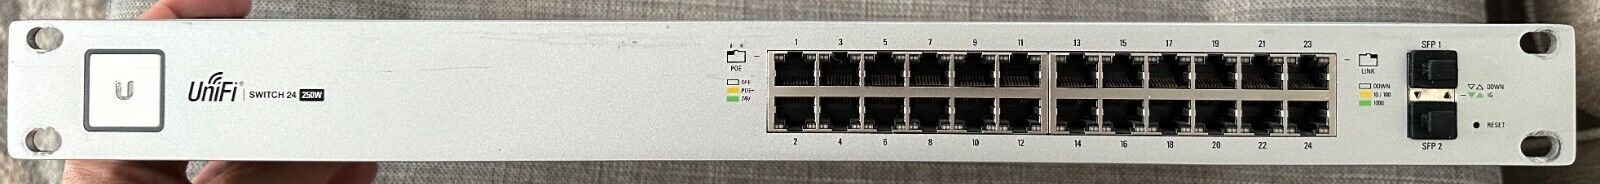 UniFi Ubiquiti Switch, US-24-250W 24 Port Rack Mountable Ethernet Switch